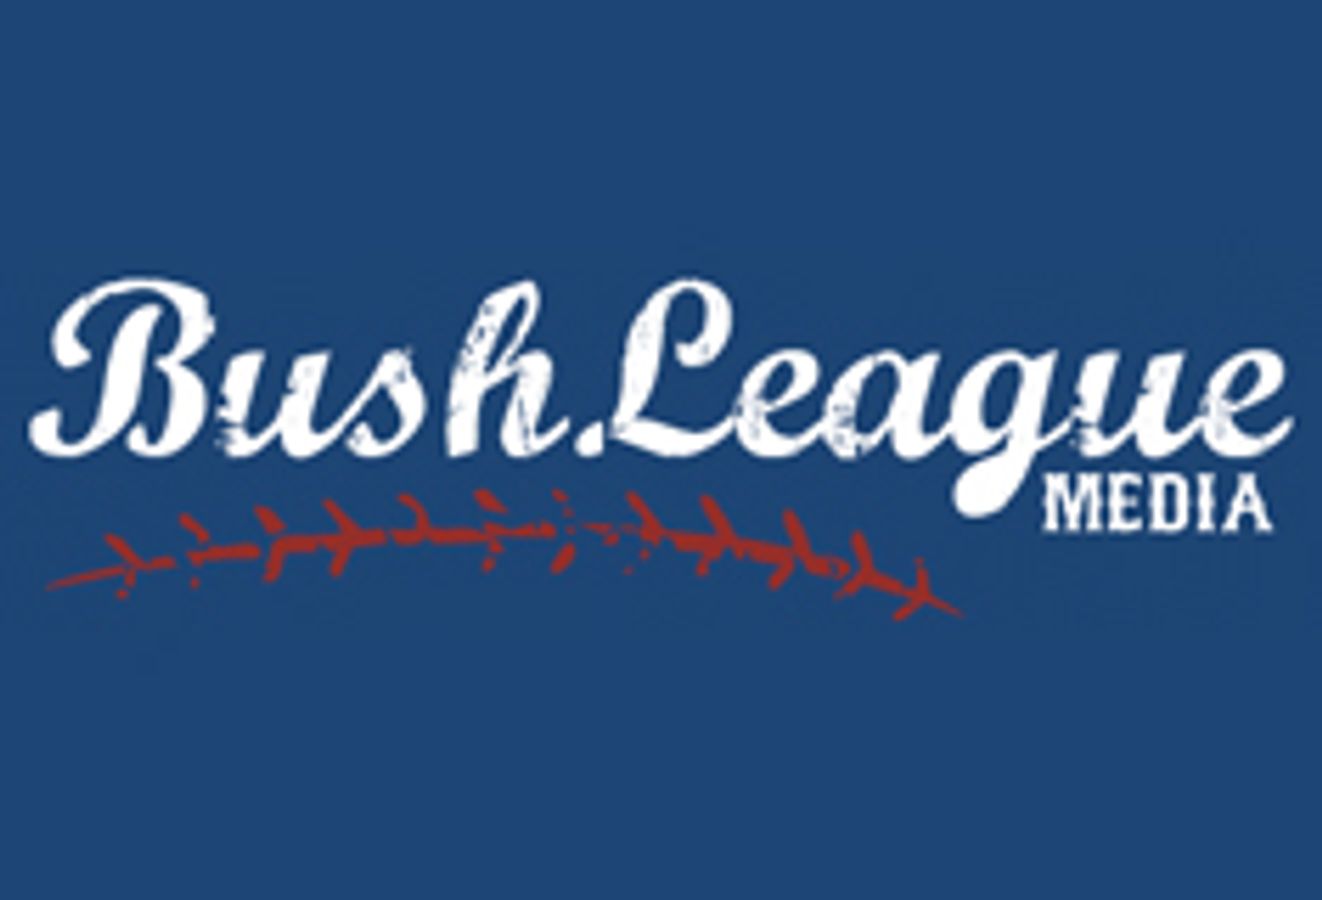 Bush League Media